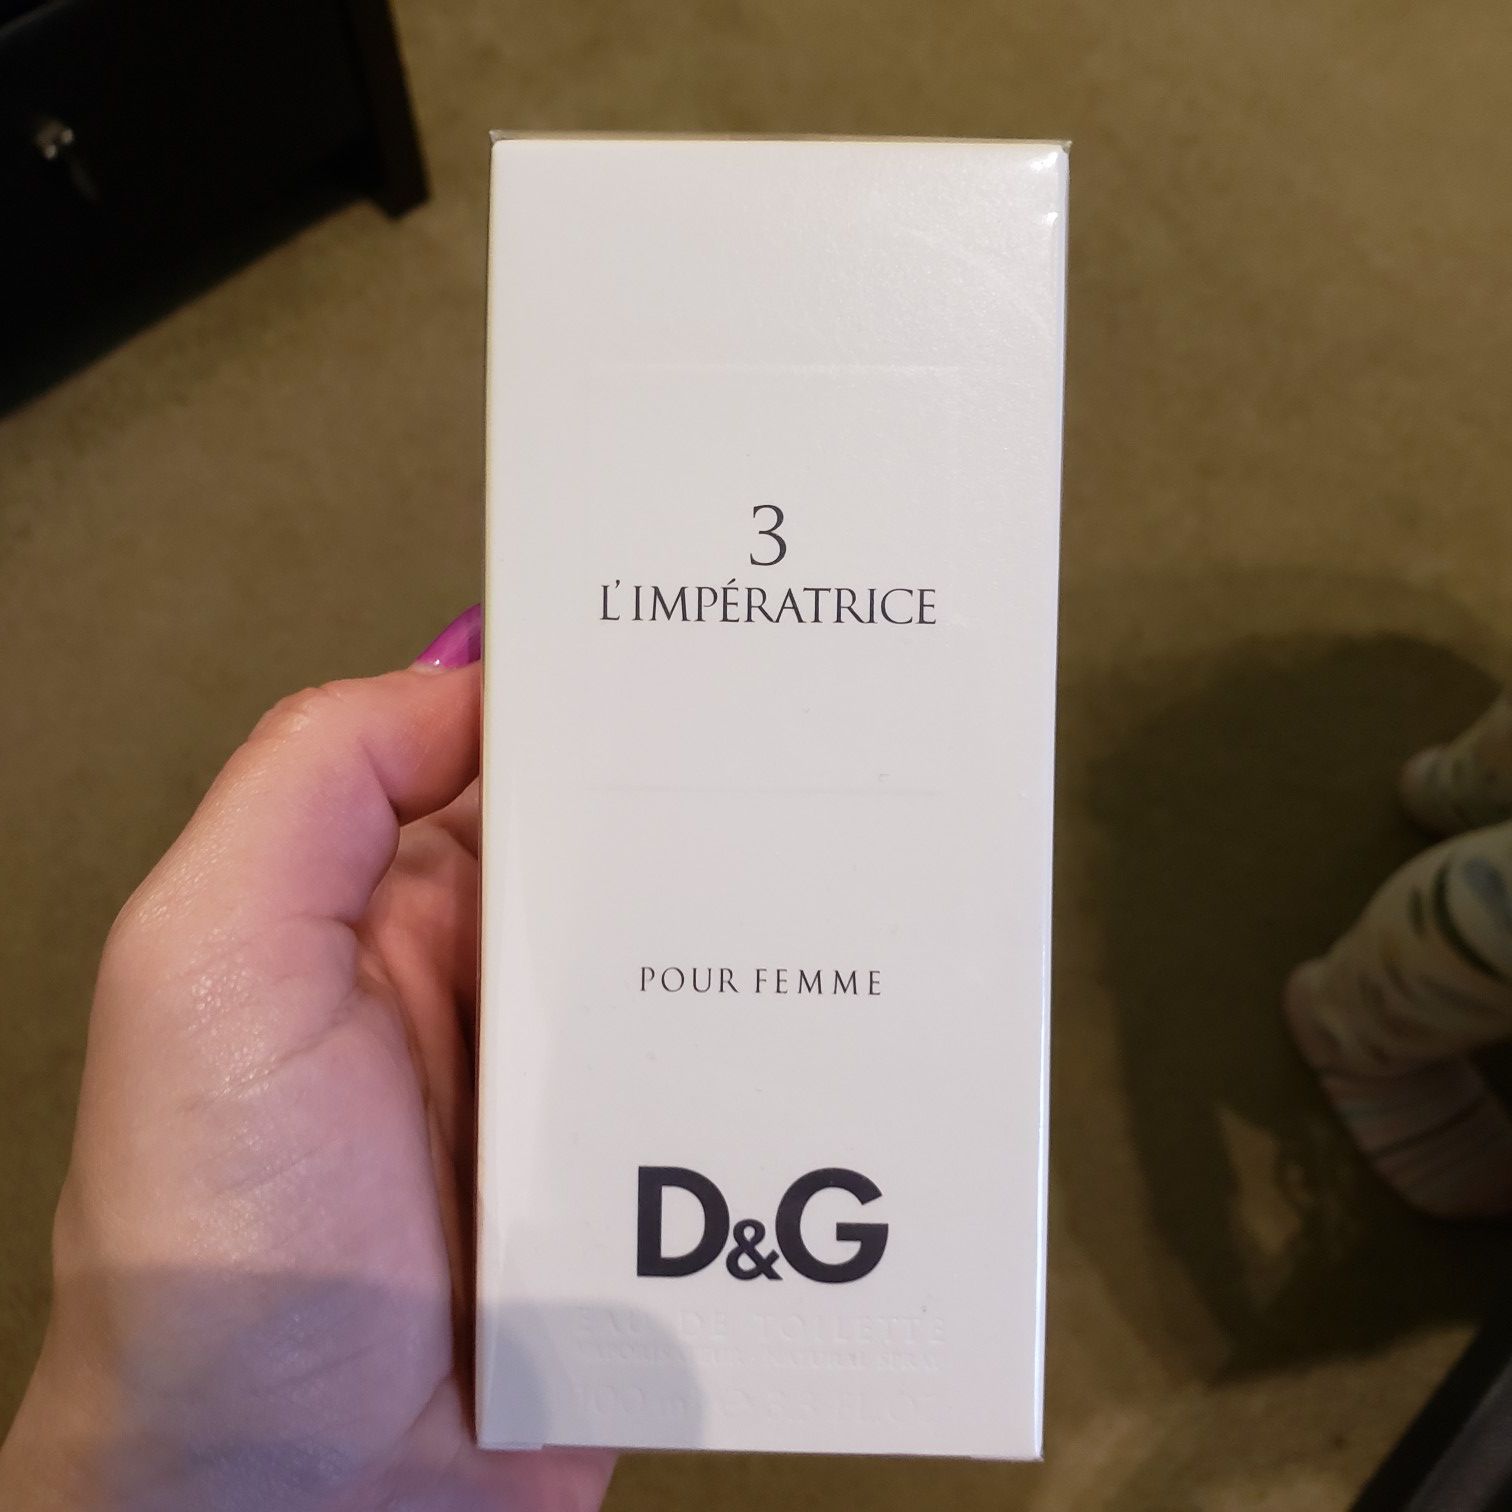 D&G perfume